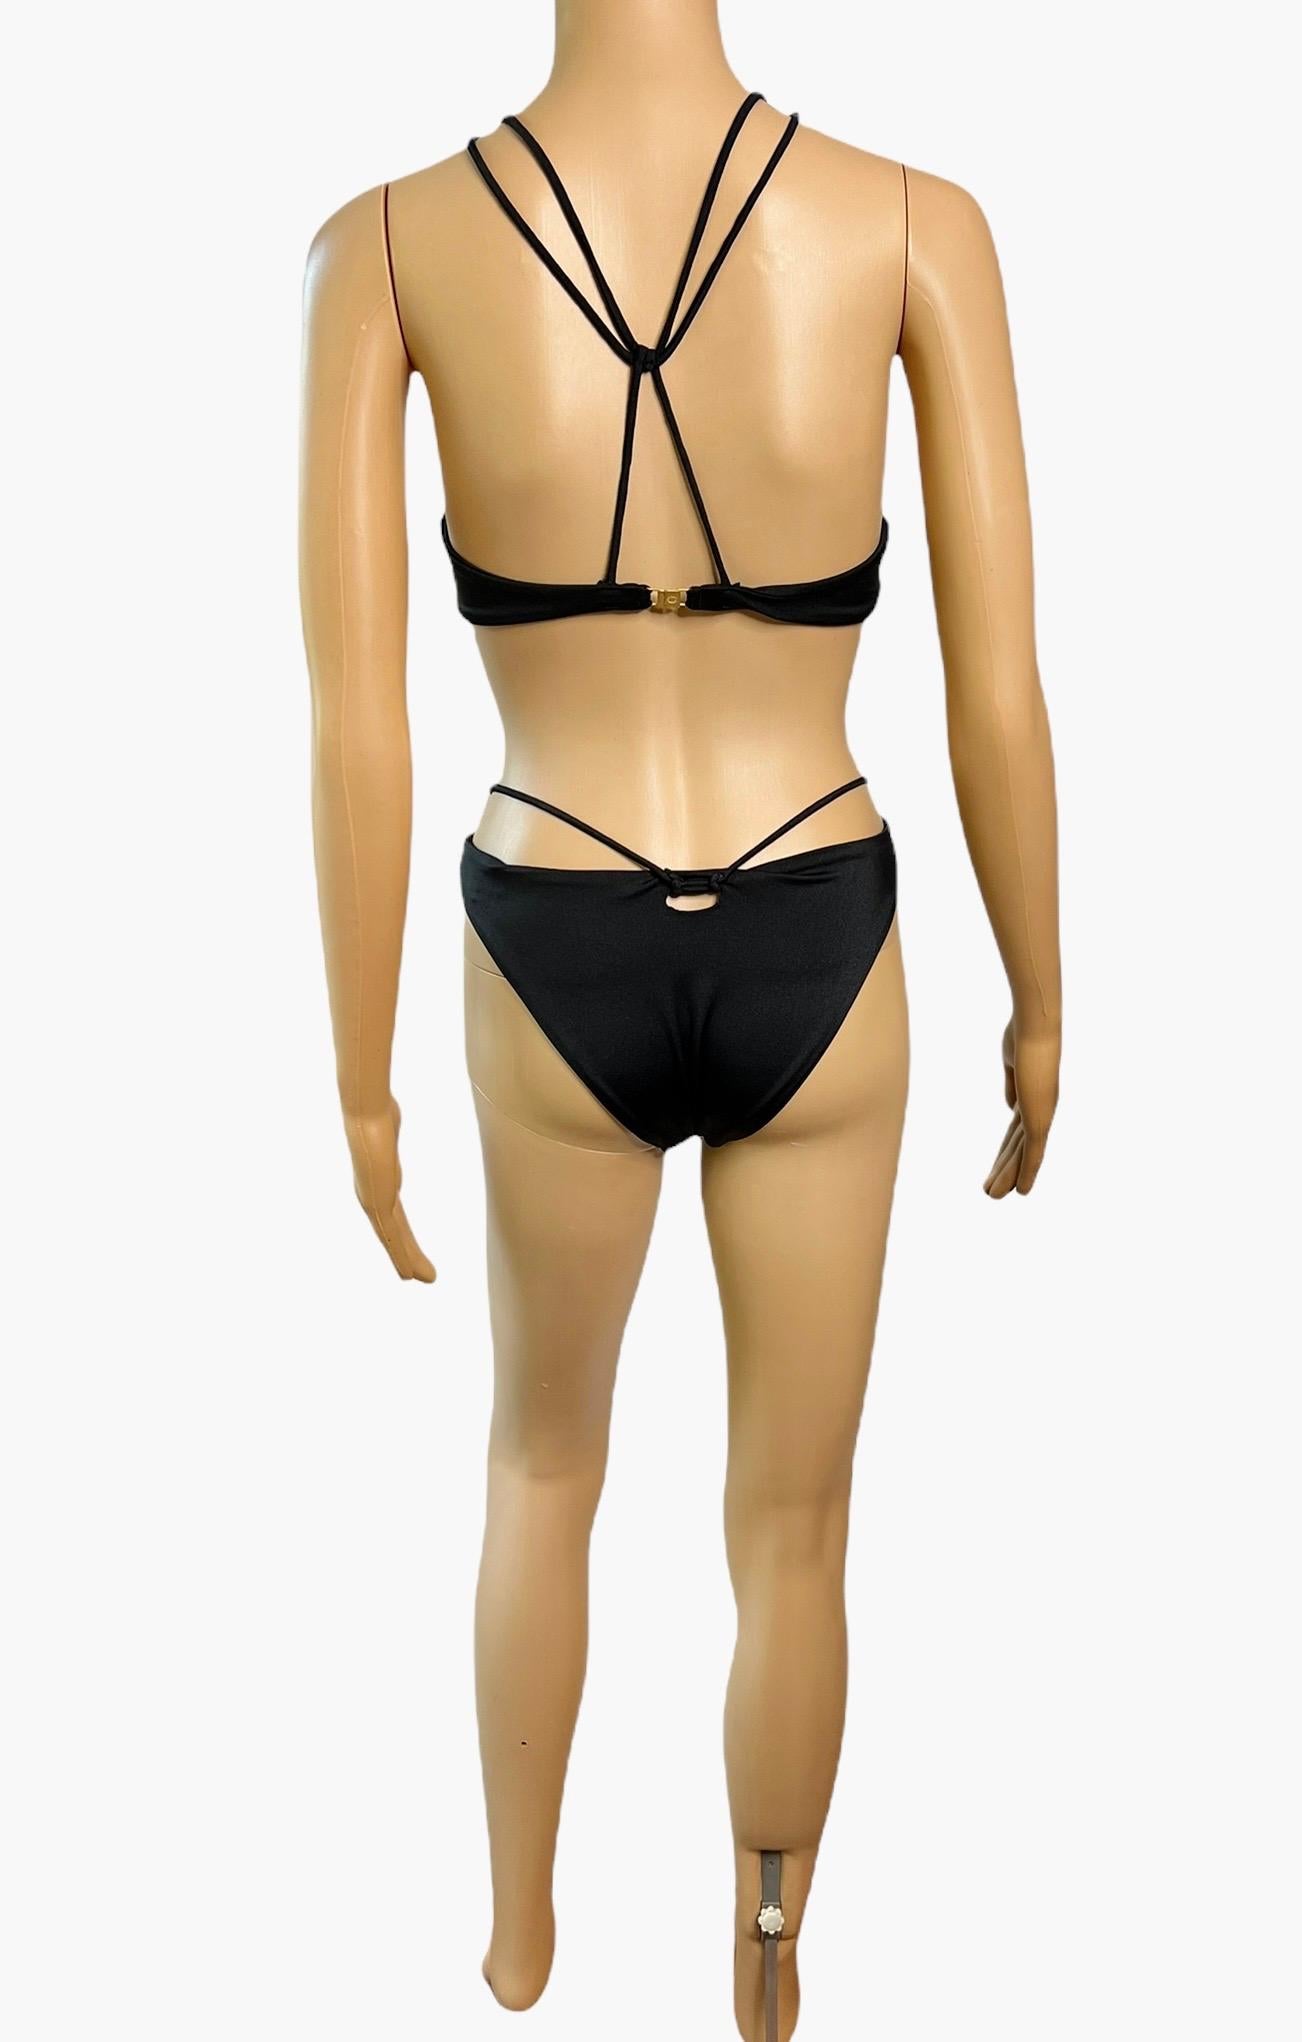 Tom Ford for Gucci c.2004 Bondage Strappy Black 2 Piece Bikini Swimsuit Swimwear Size M
